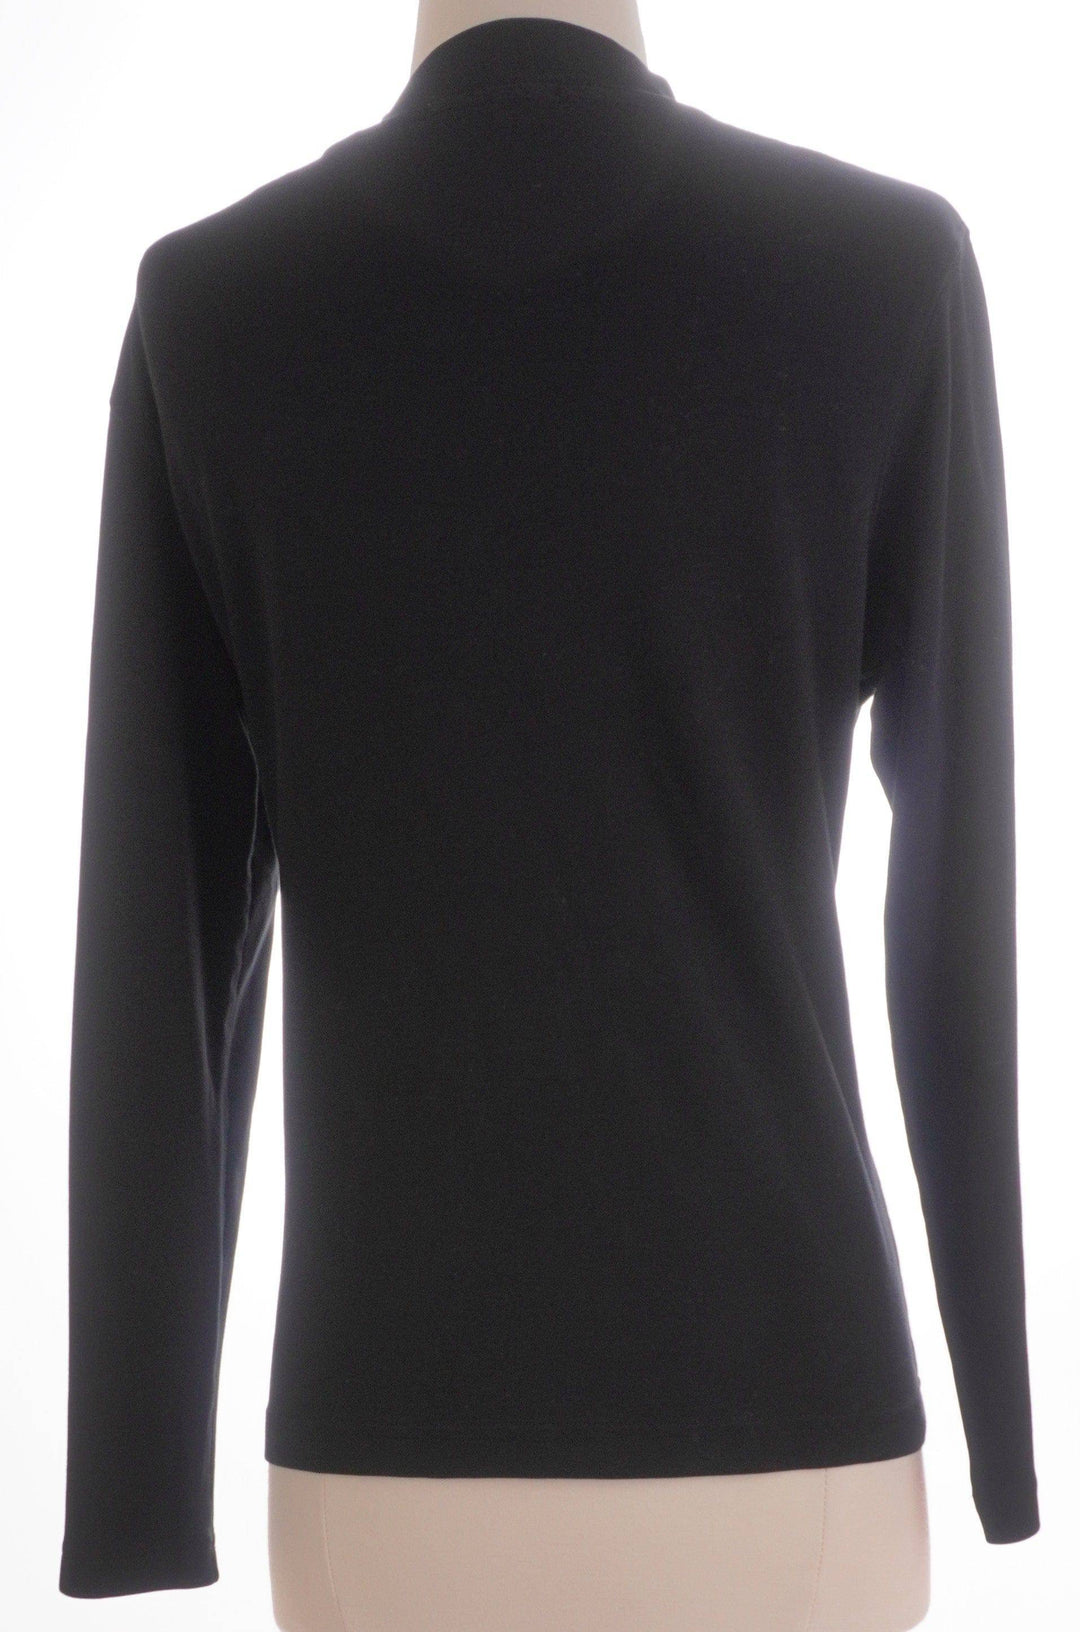 Fairway & Greene Black / Medium / Consigned Fairway & Greene Long Sleeve Top - Black - Size Medium